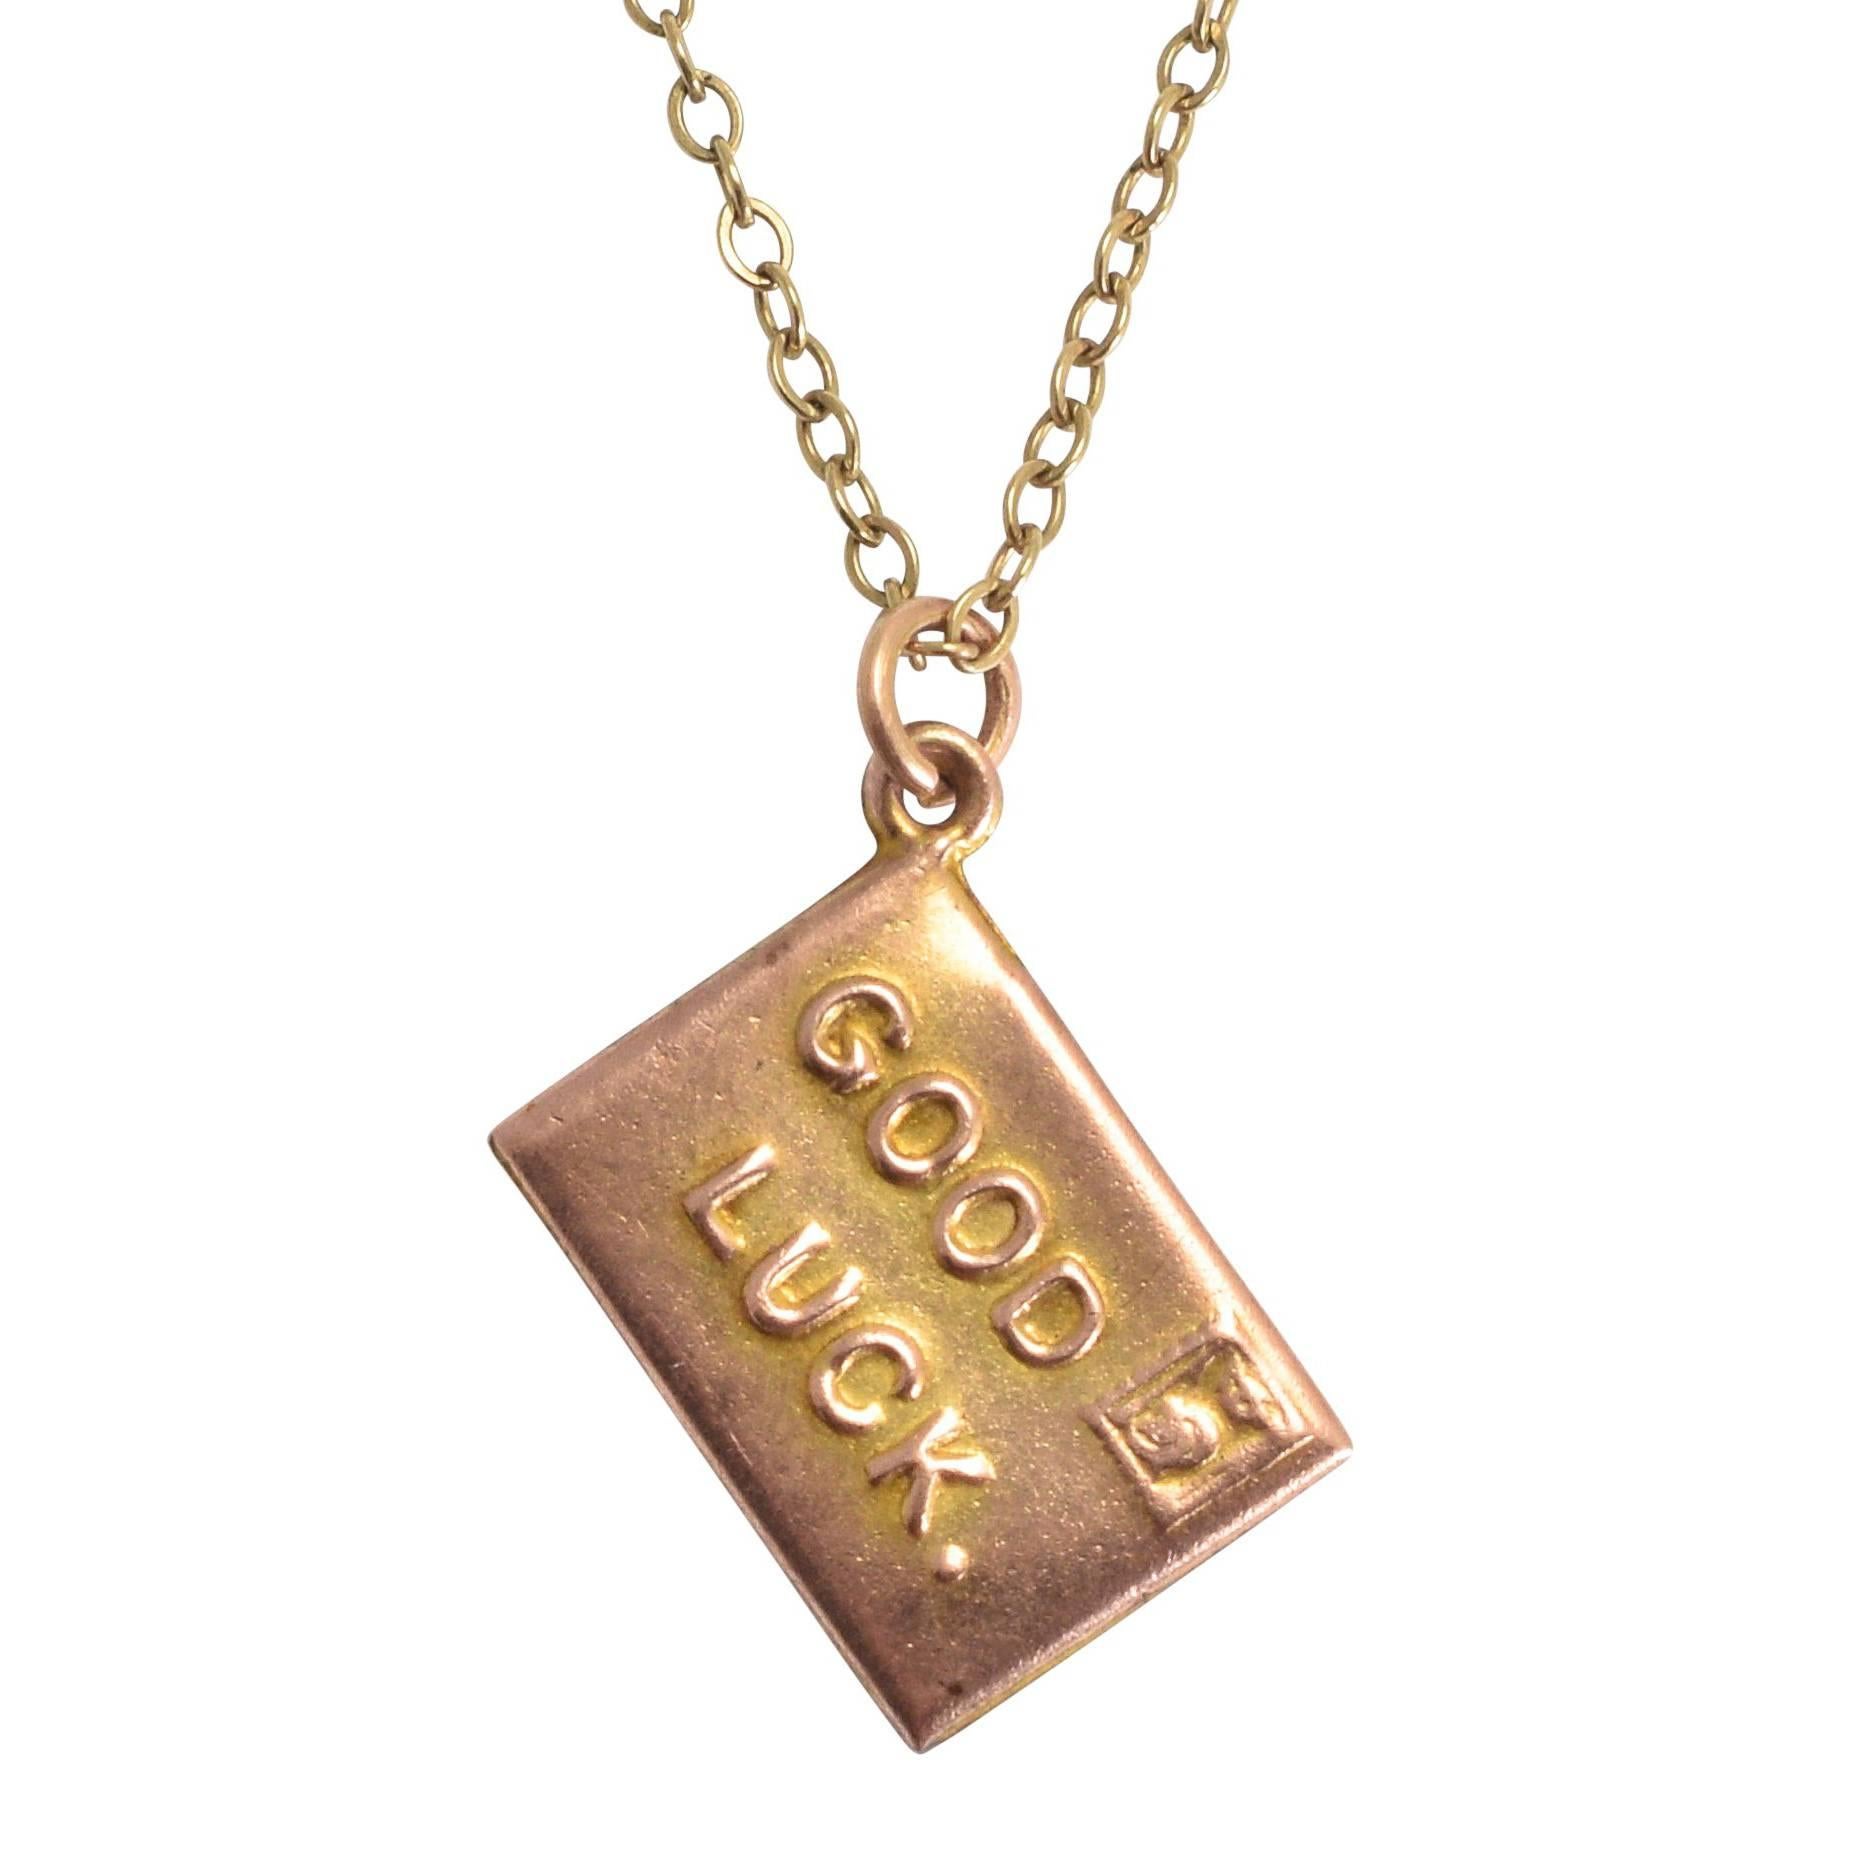 Antique Edwardian "Good Luck" Gold Envelope Charm